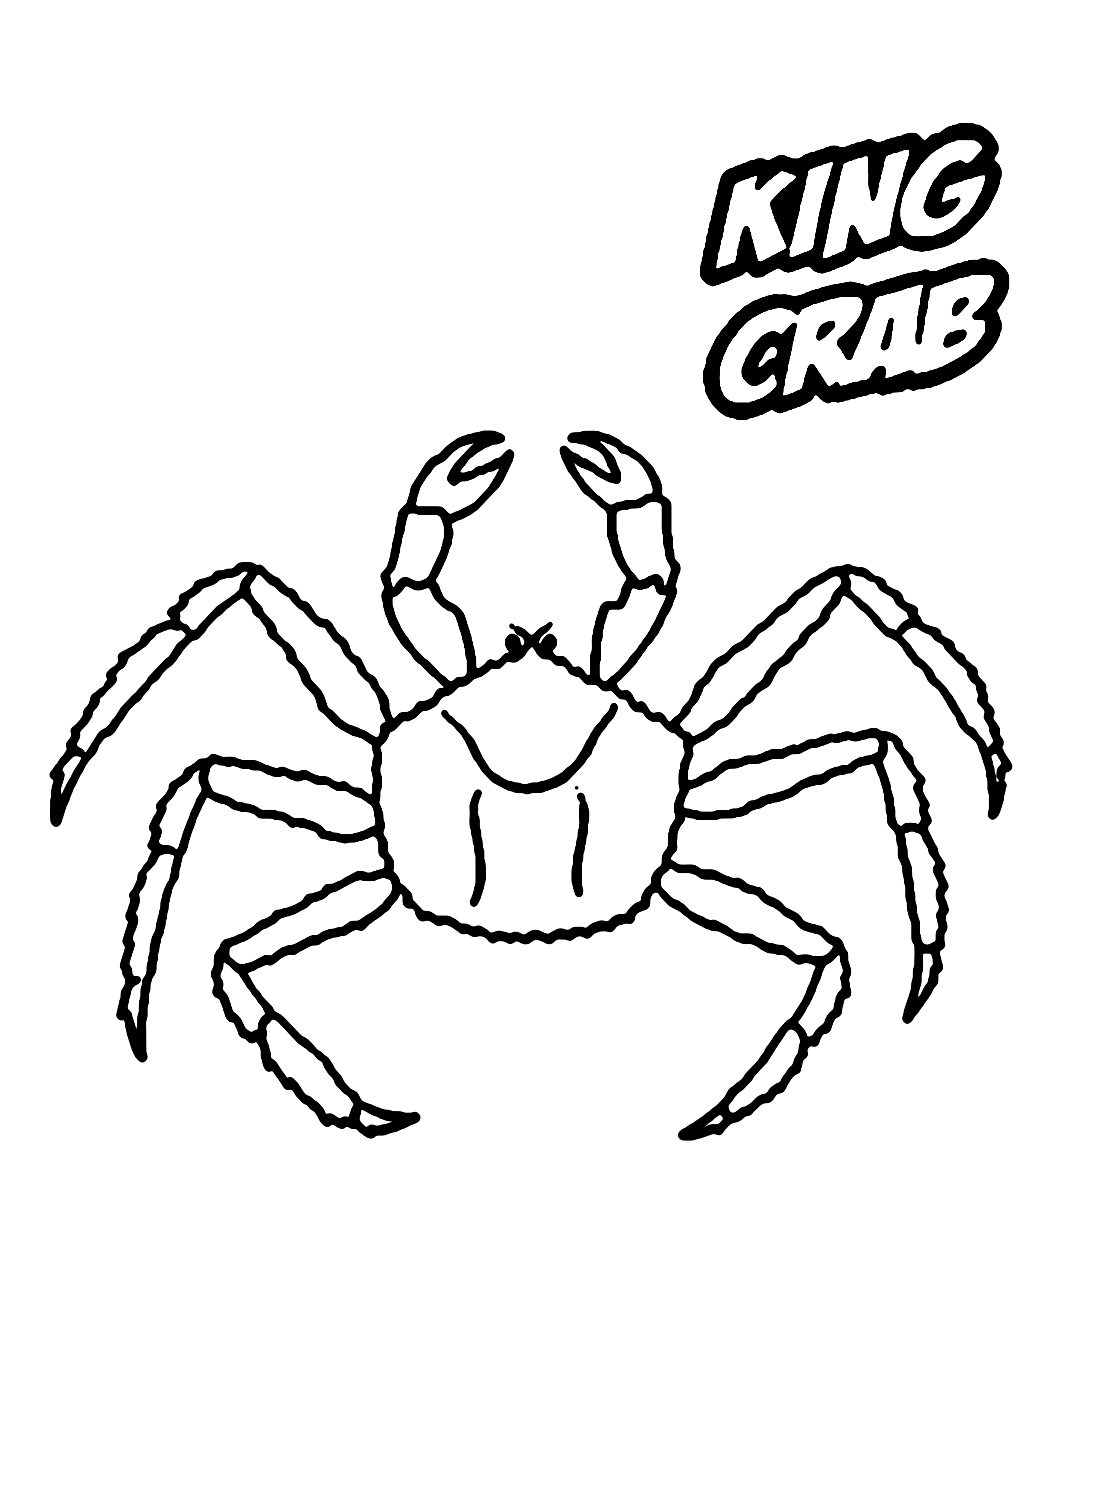 King Crab مجاني من King Crab